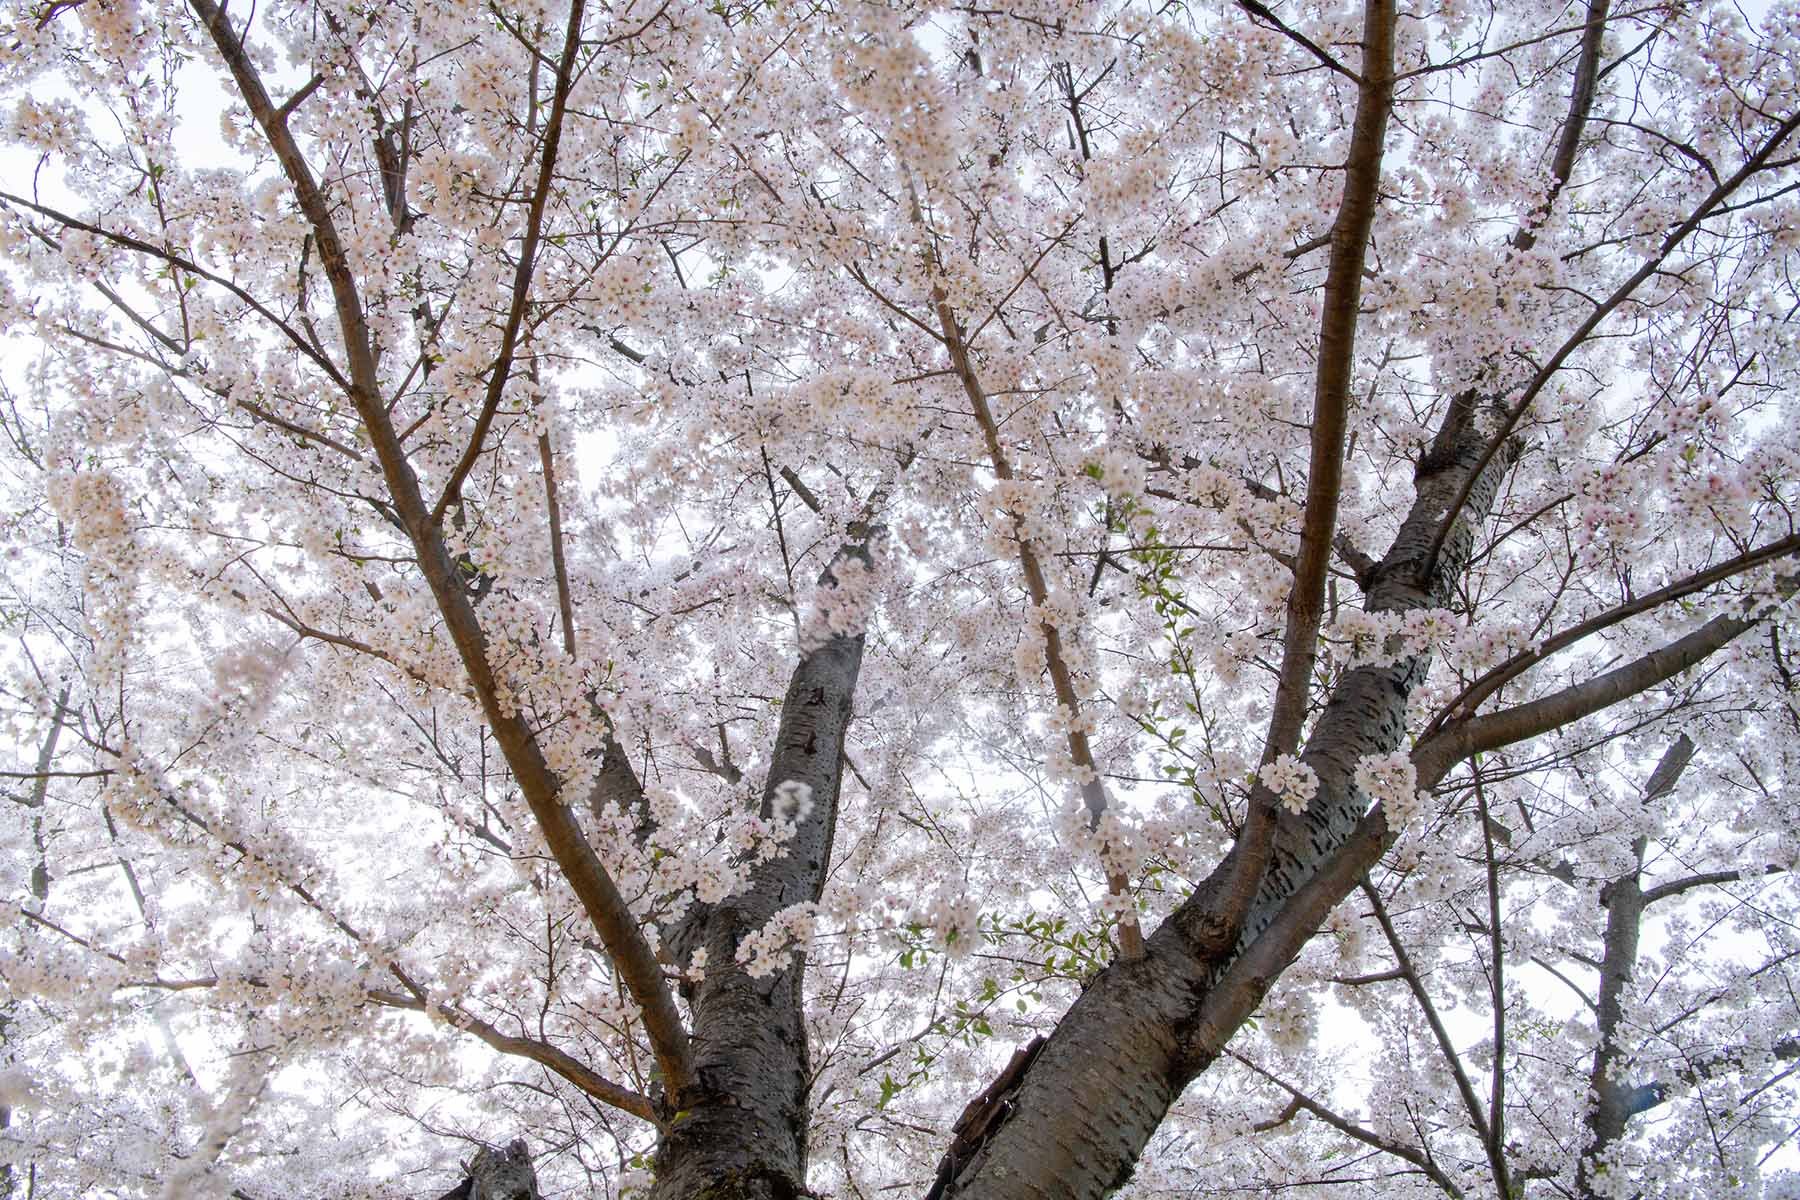 A flowering cherry blossom tree